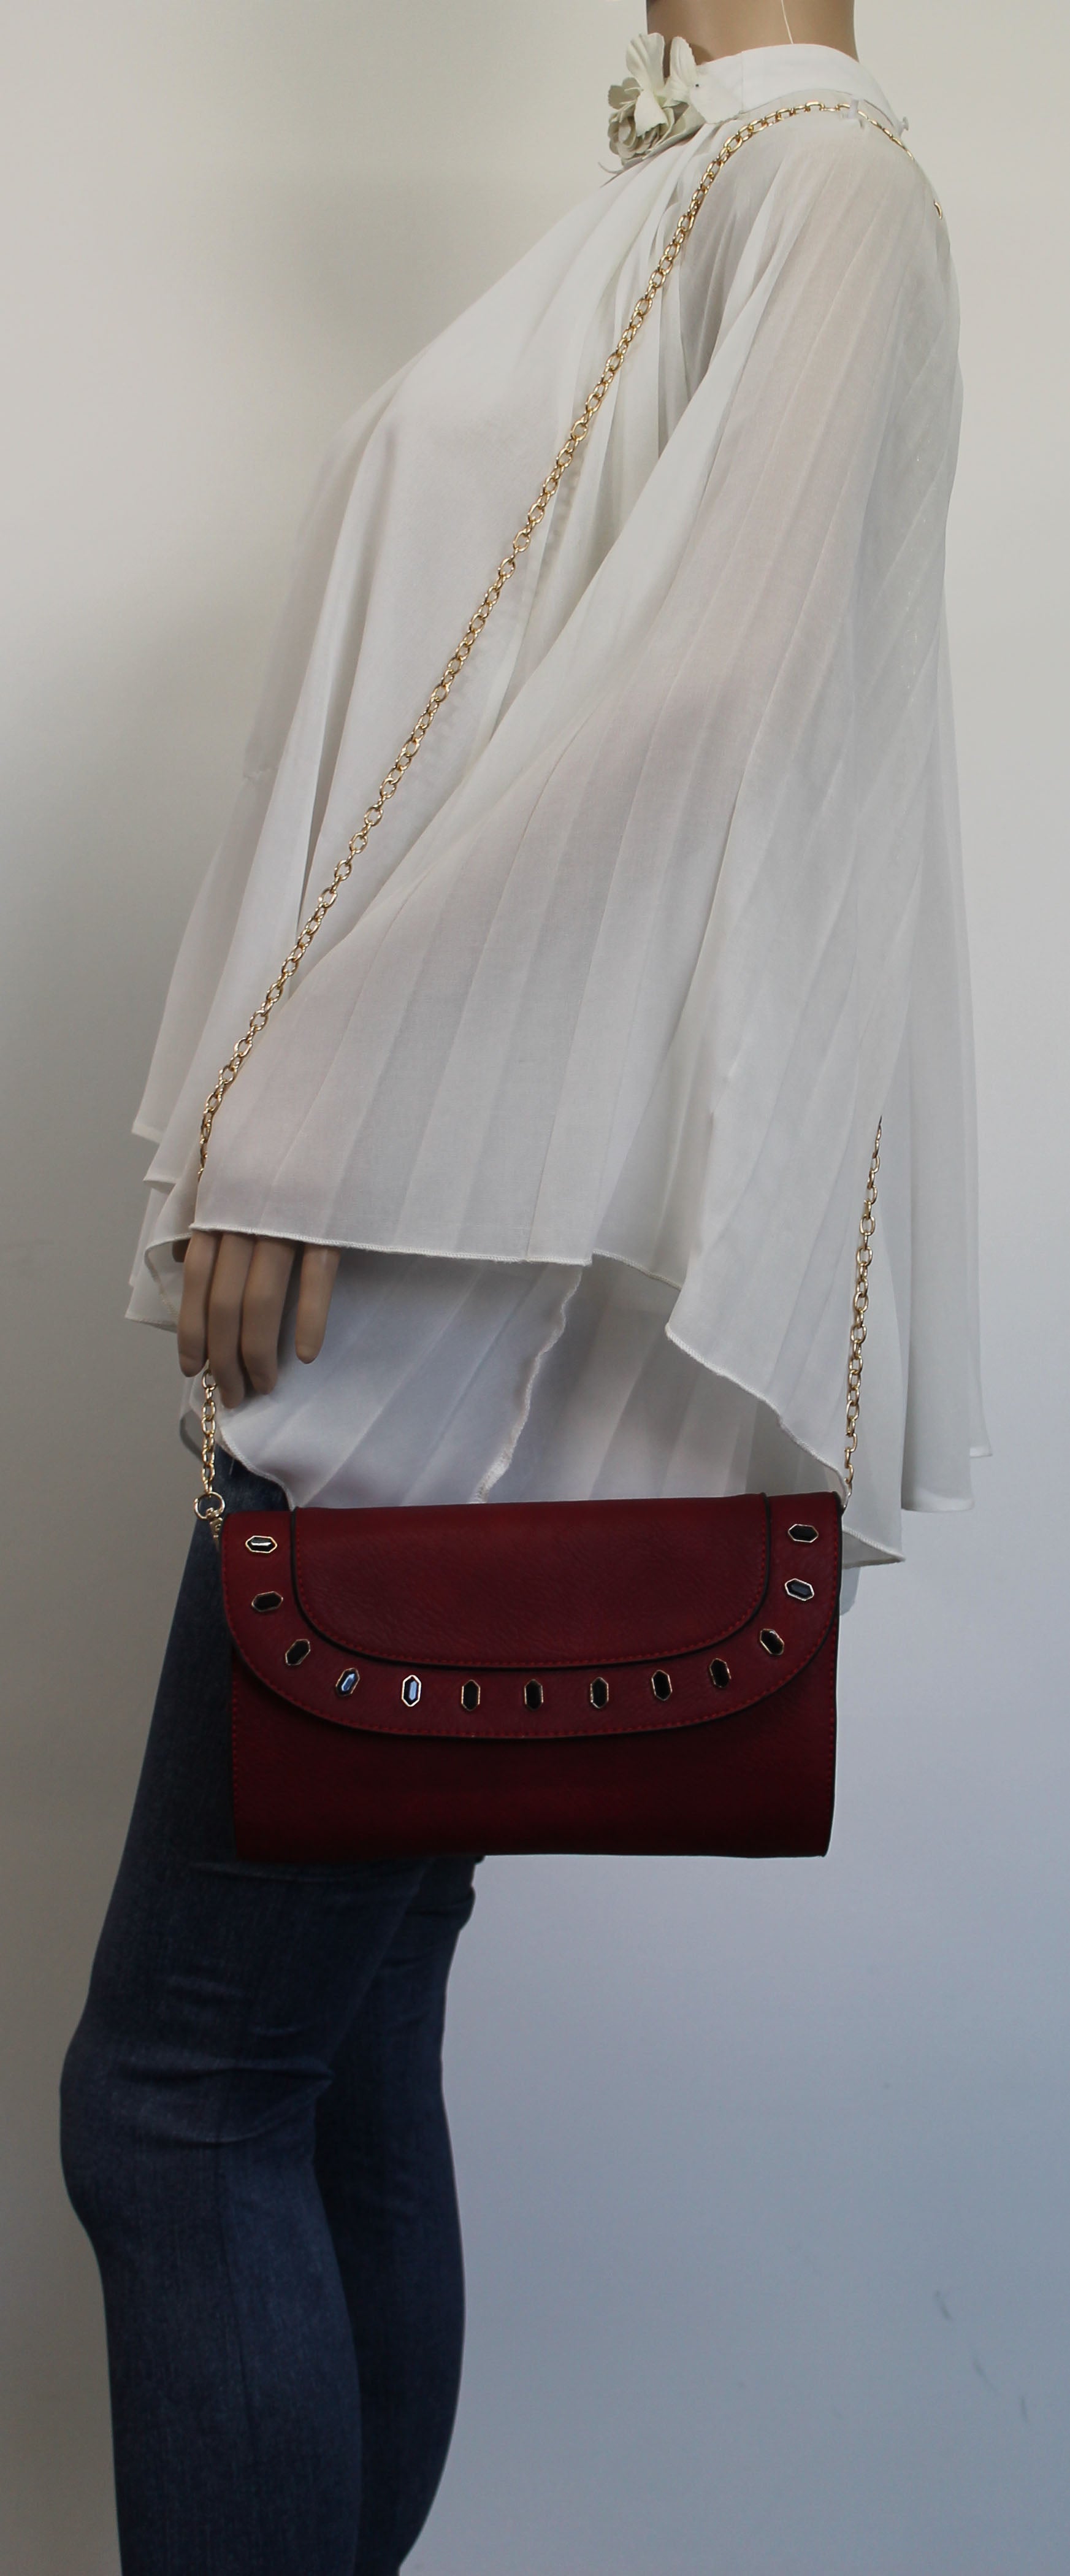 SWANKYSWANS Tiare Onyx Style Clutch Bag Burgundy Cute Cheap Clutch Bag For Weddings School and Work